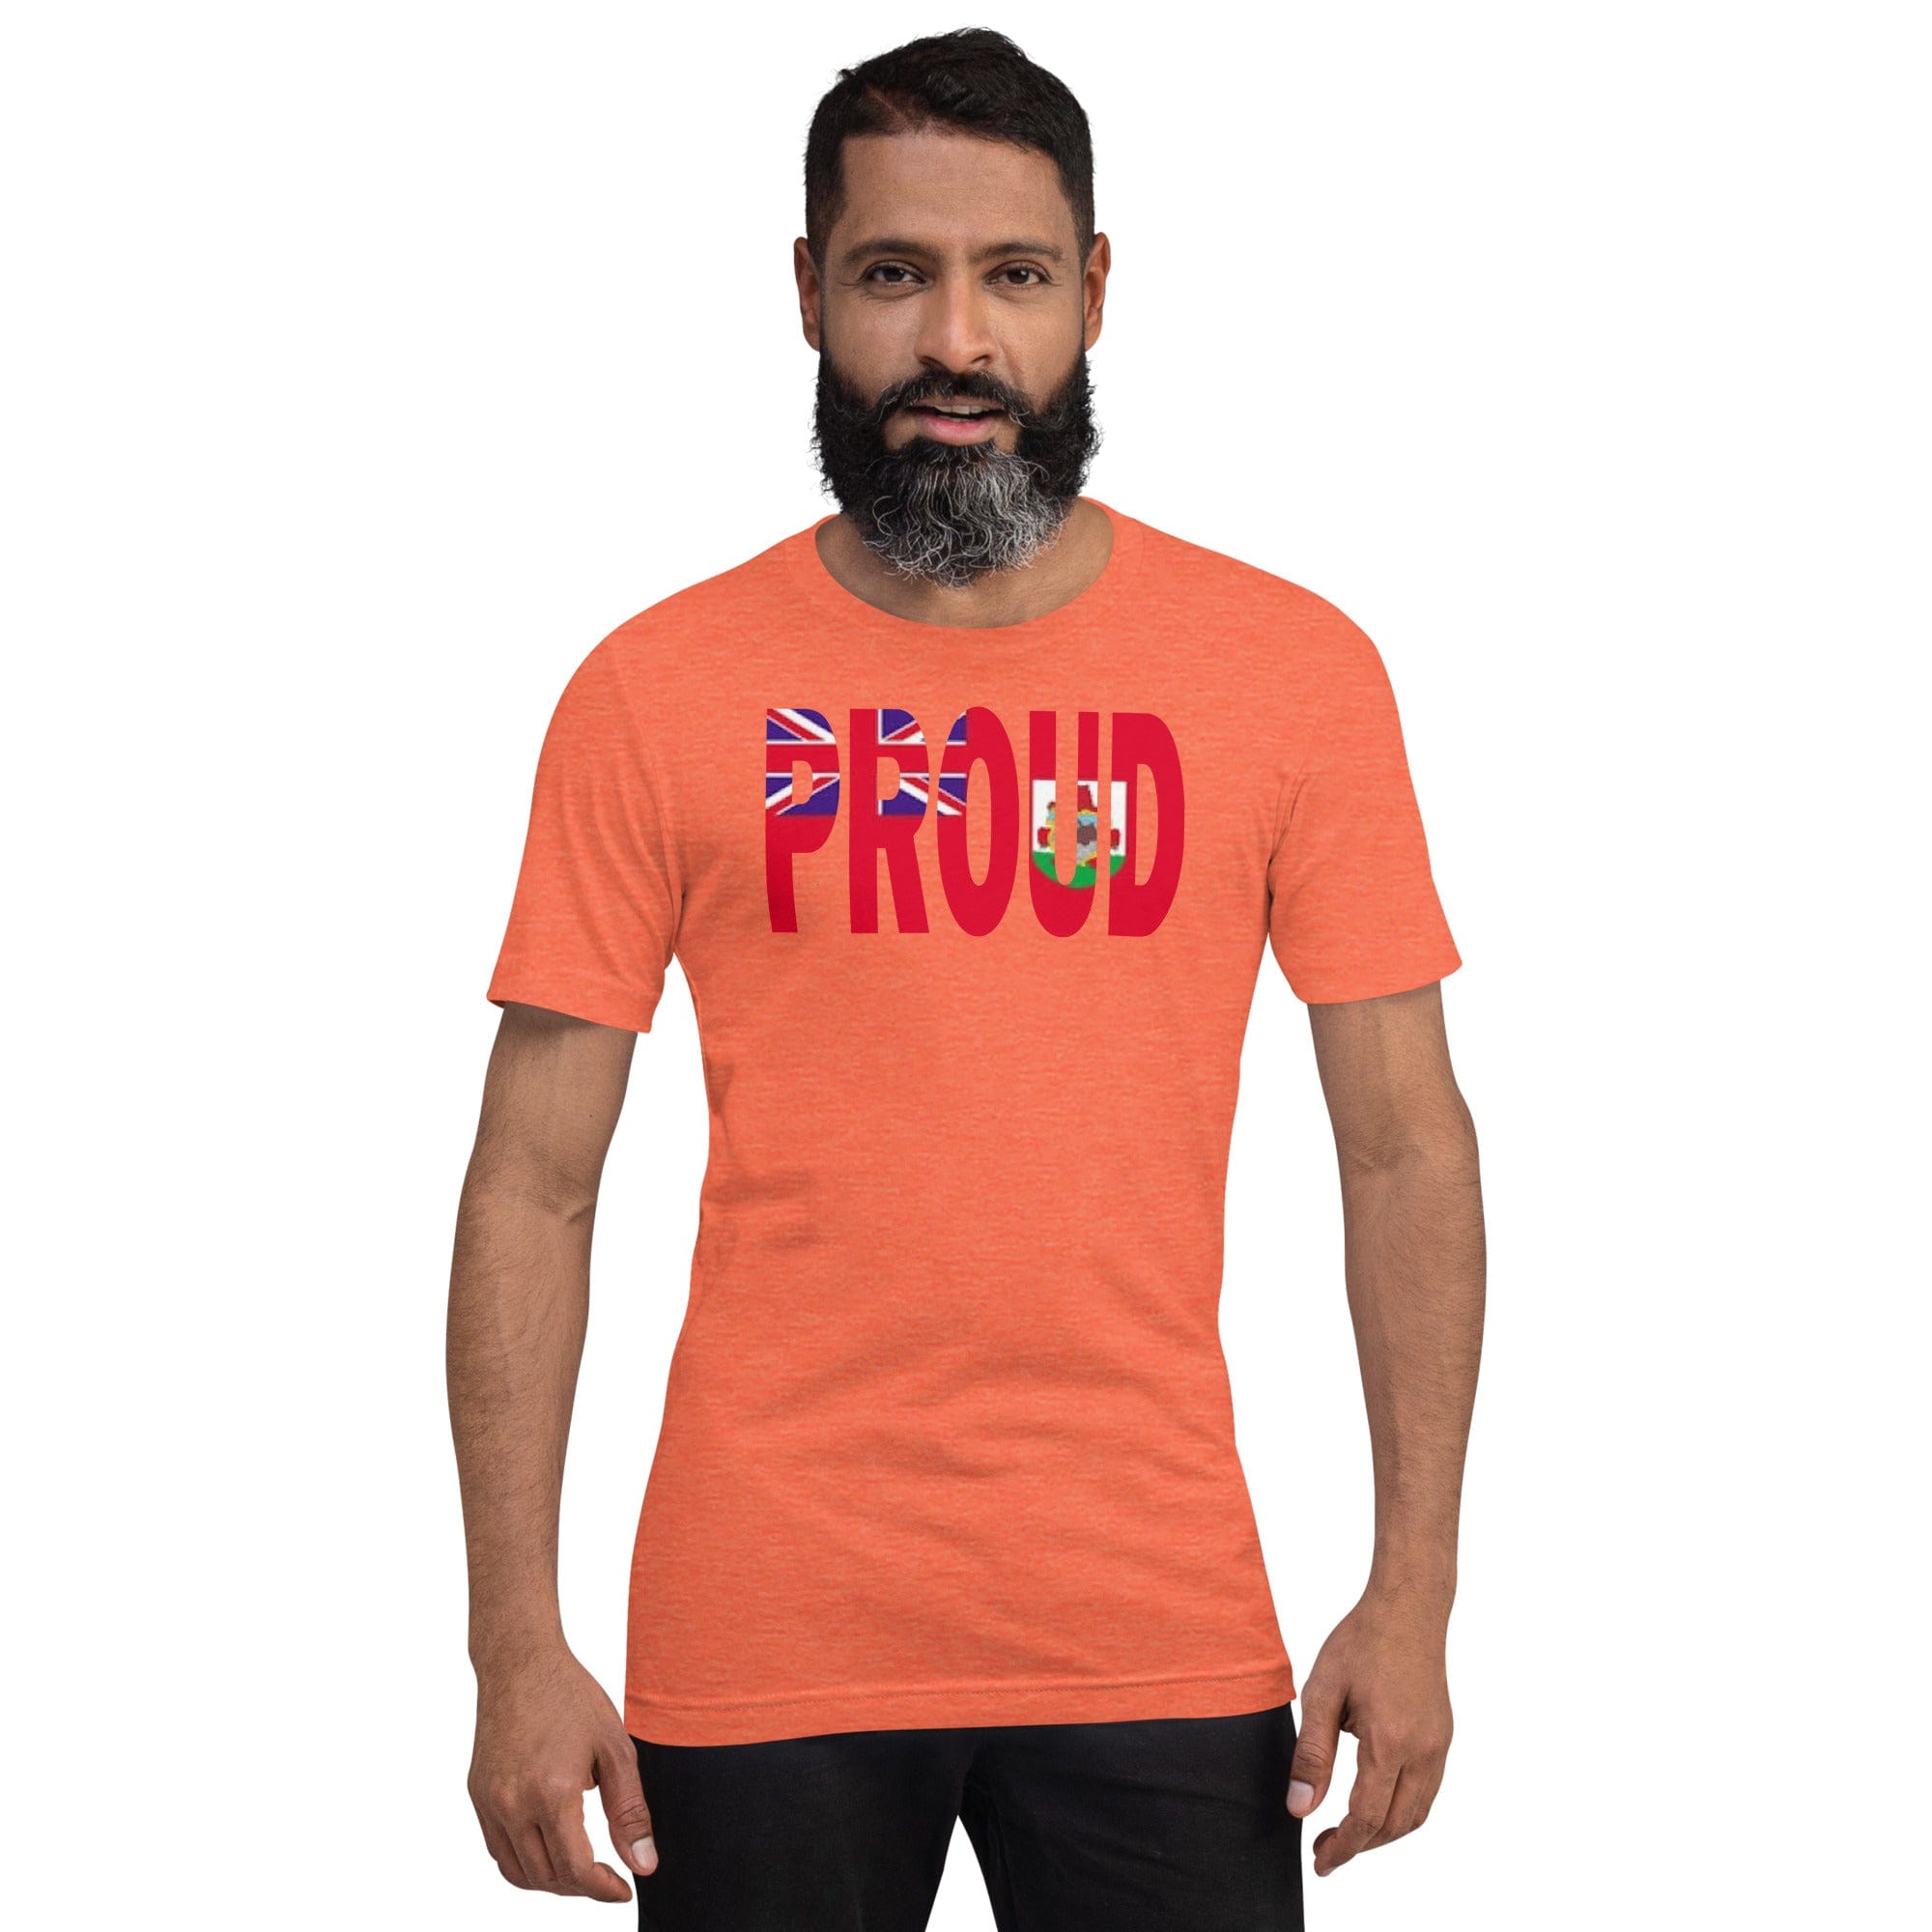 Proud Bermuda Flag orange color t-shirt on a black man.